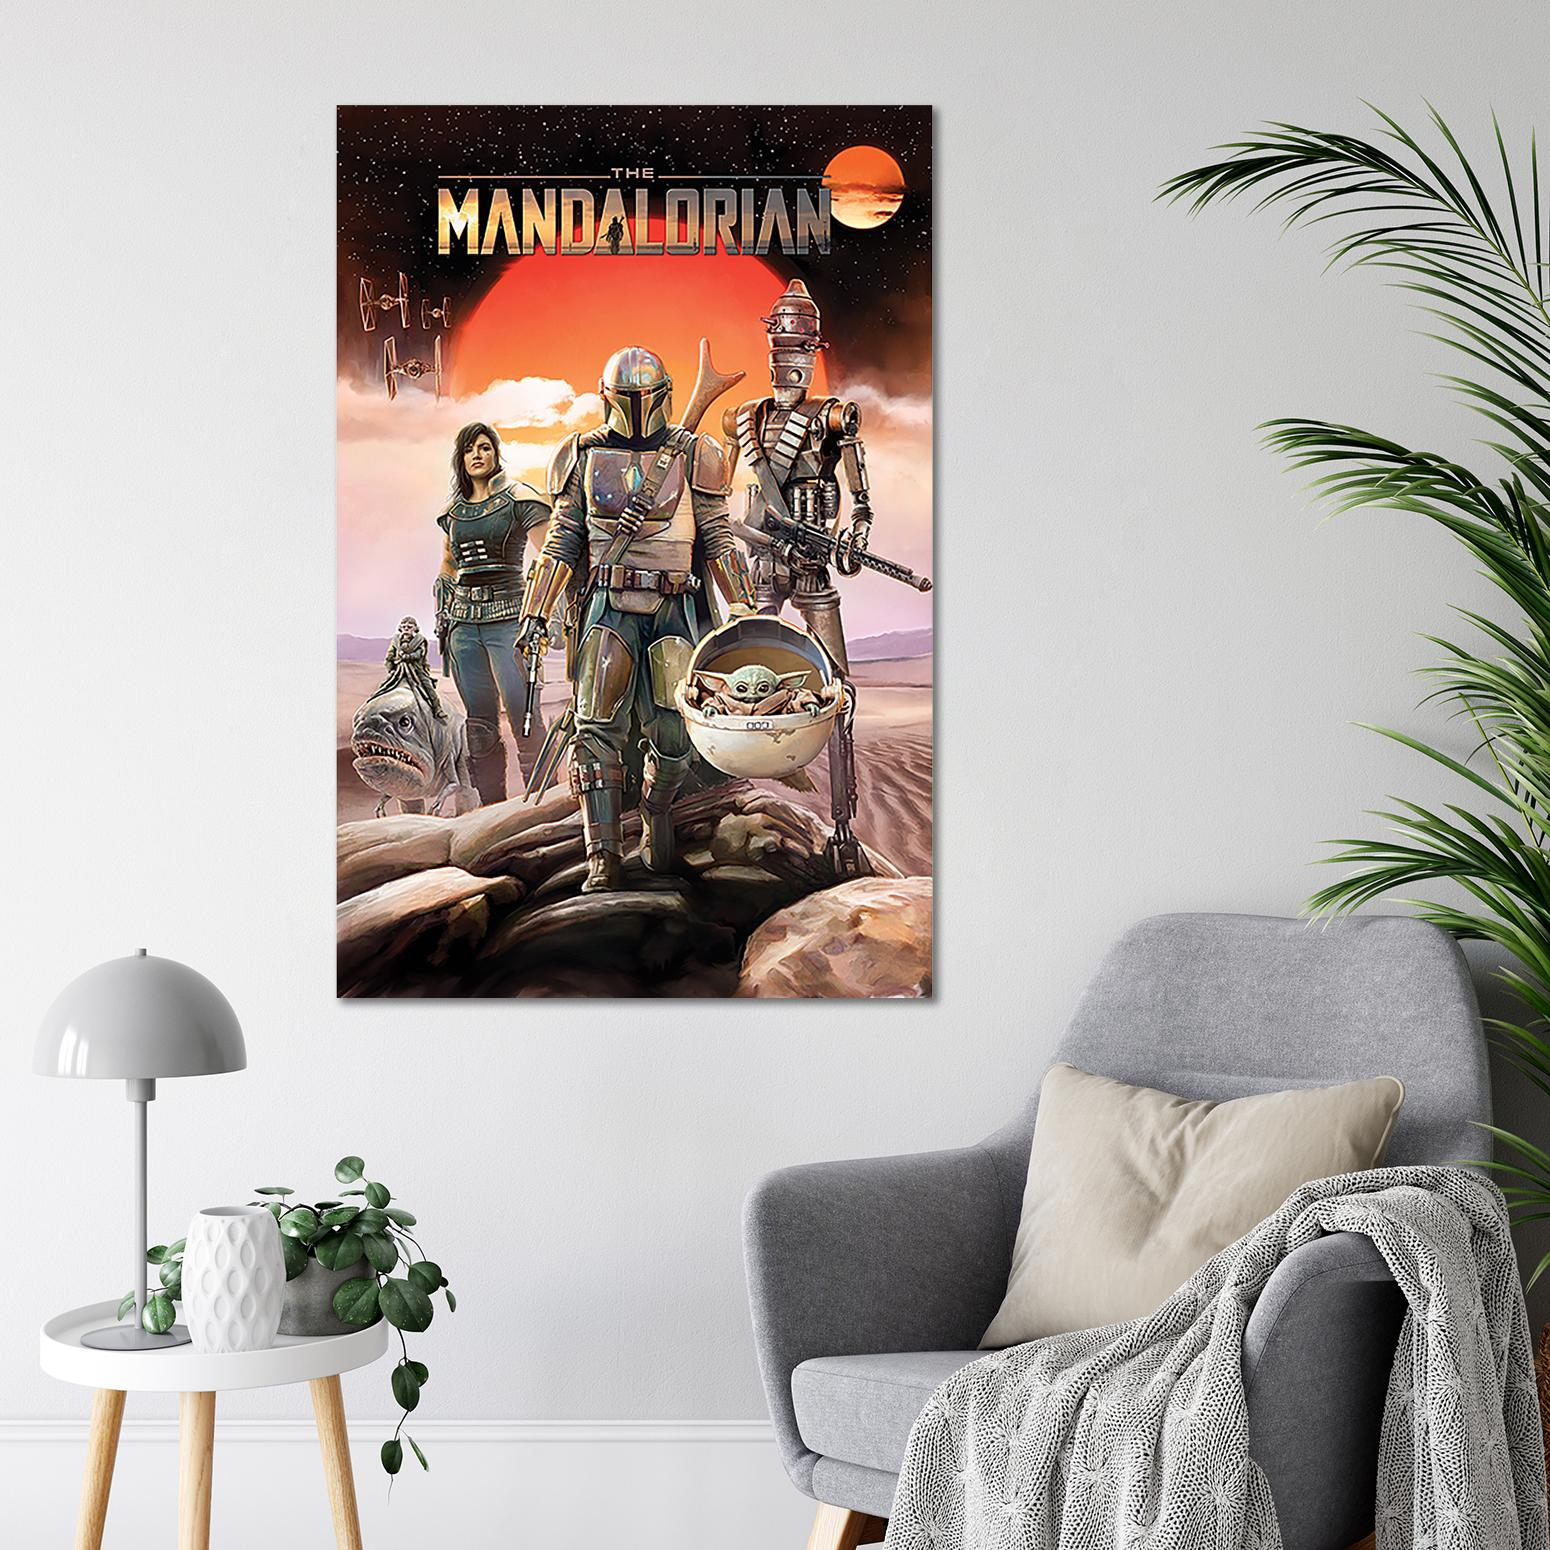 PYRAMID INTERNATIONAL The Mandalorian Poster Group Großformatige Poster